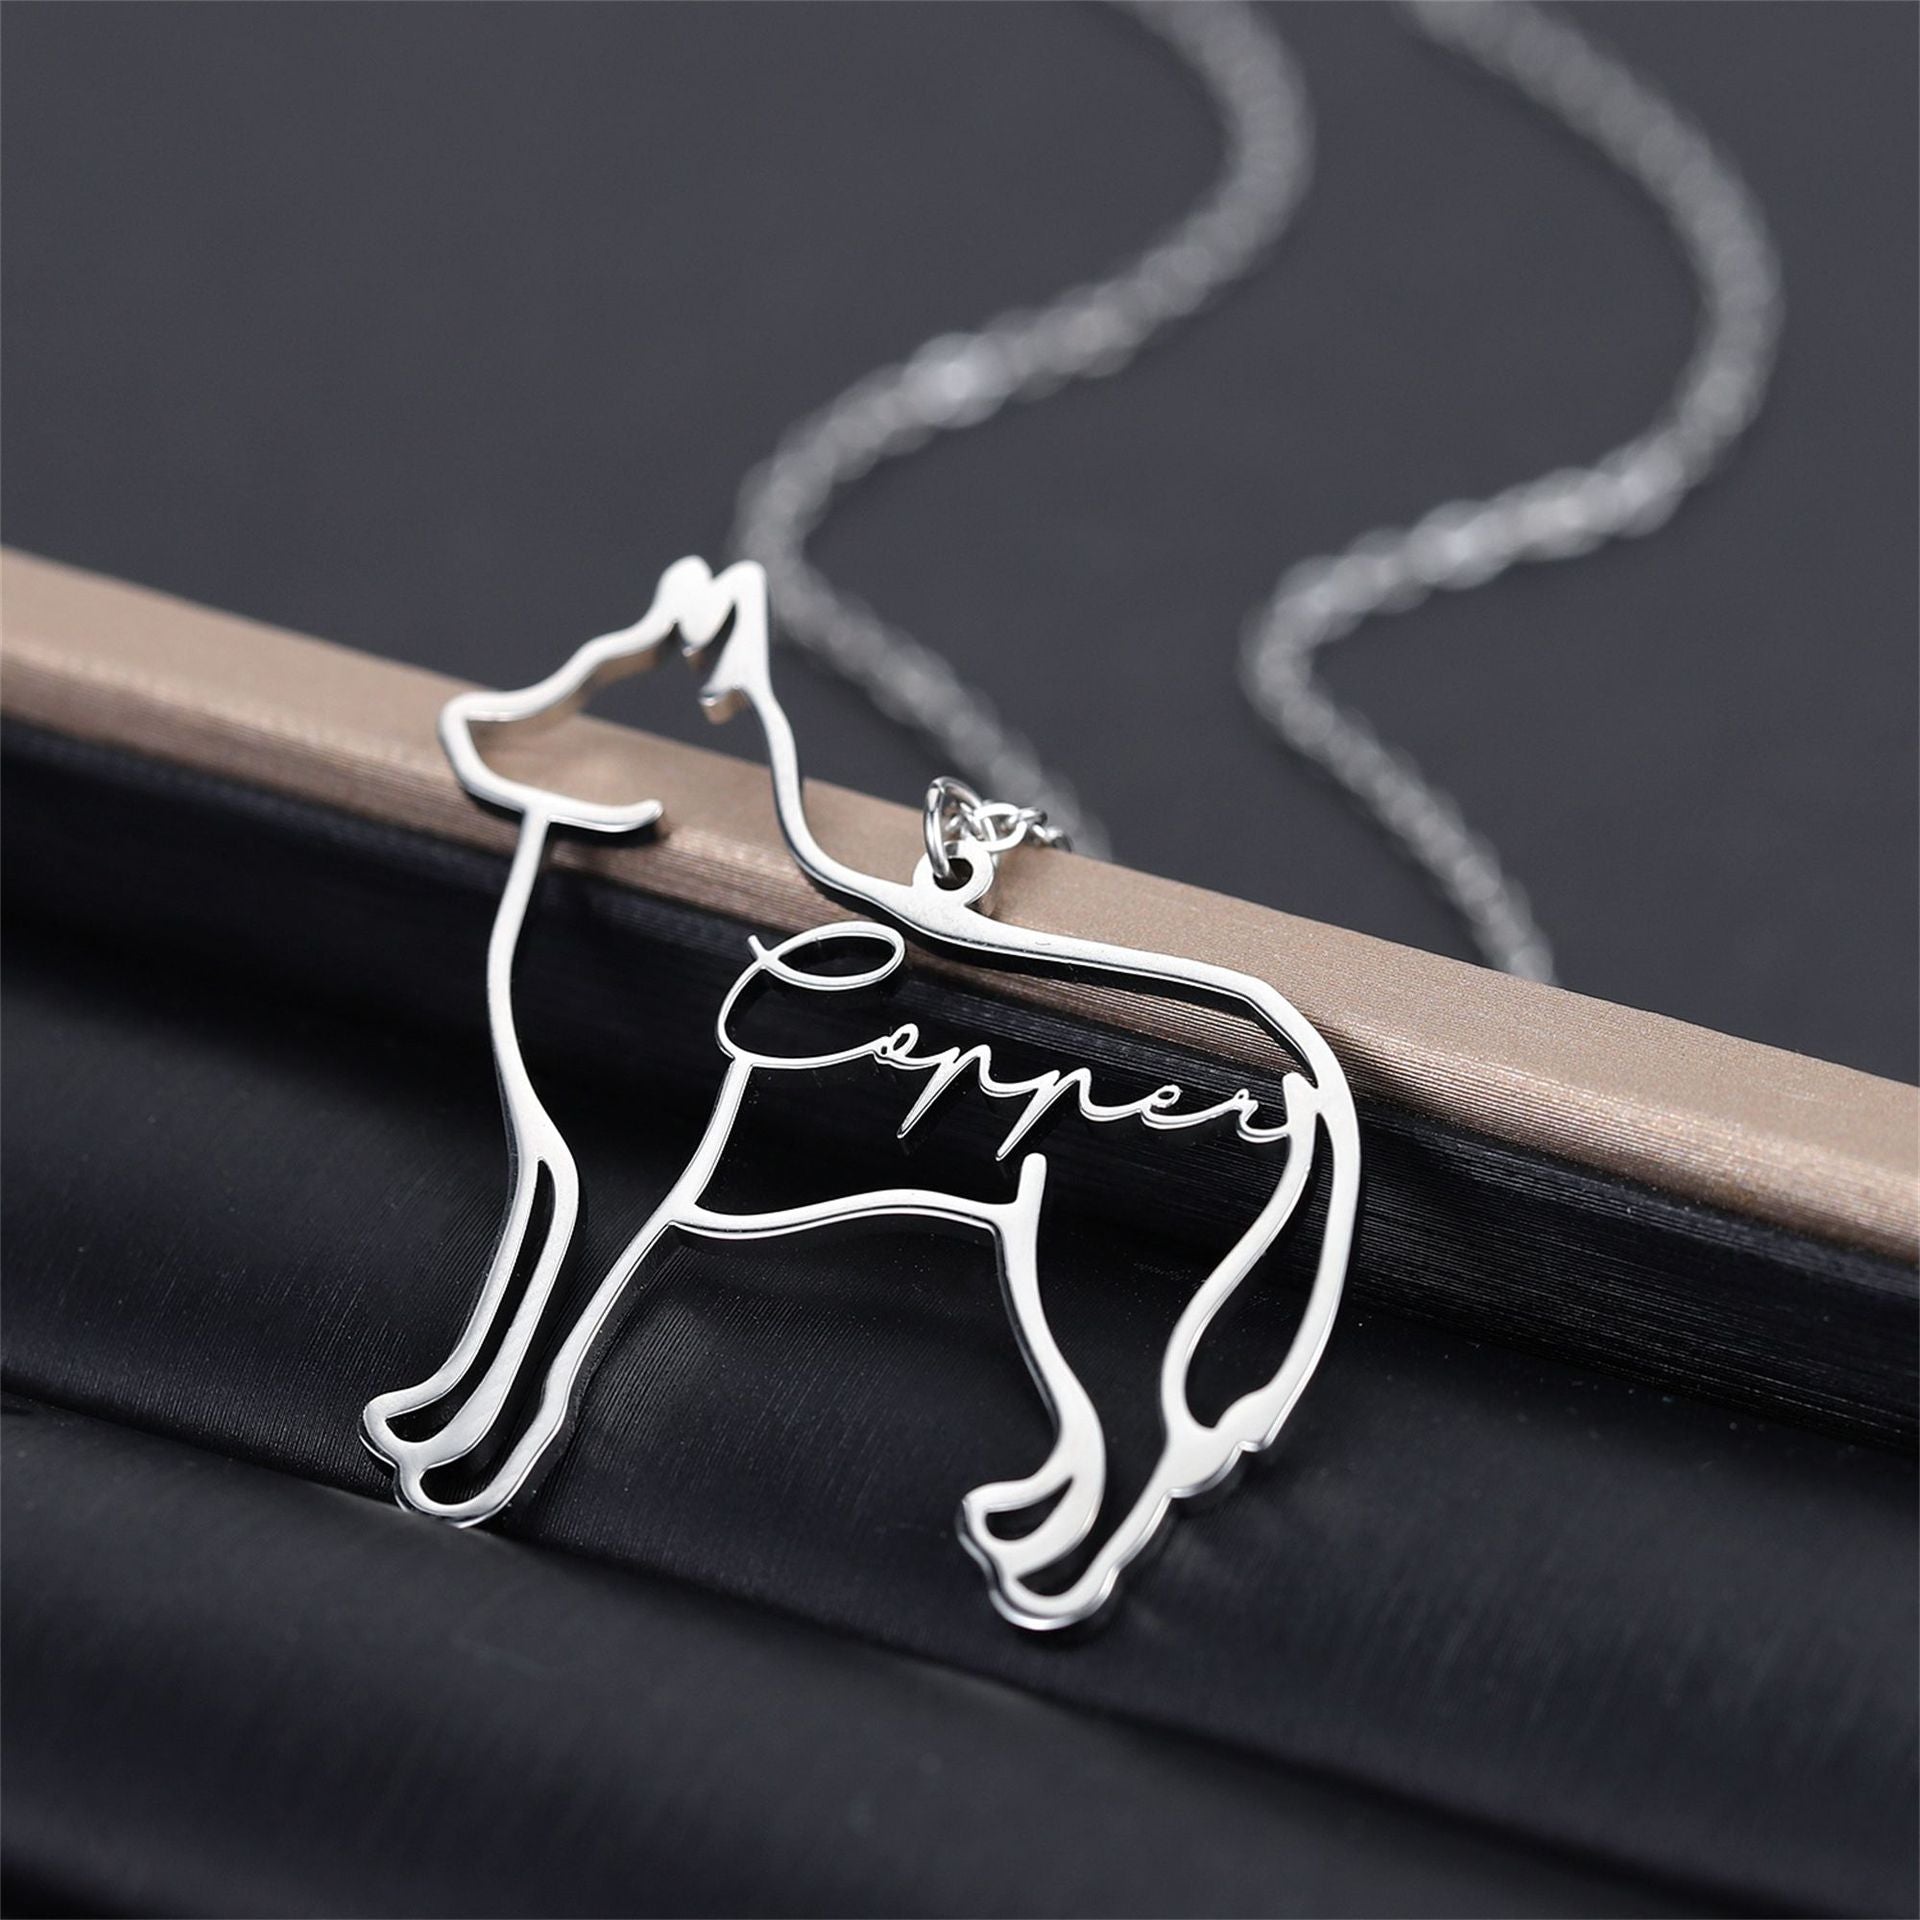 Handmade Custom Engraving Pet Necklace